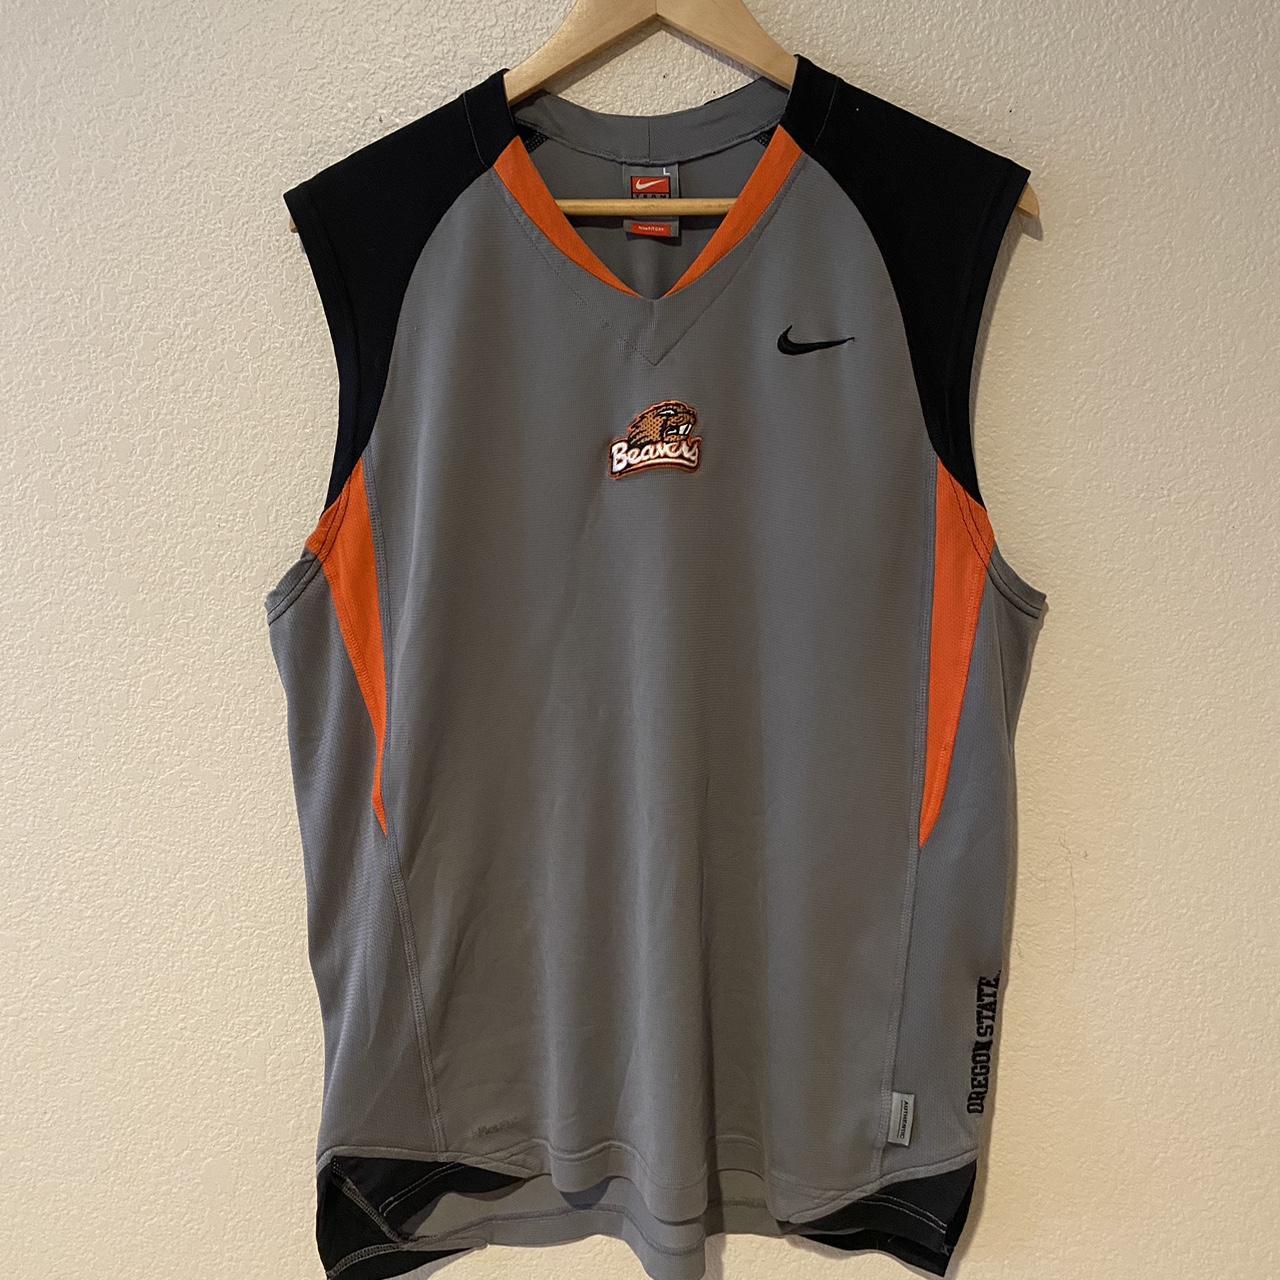 Oregon State New Nike Uniforms 